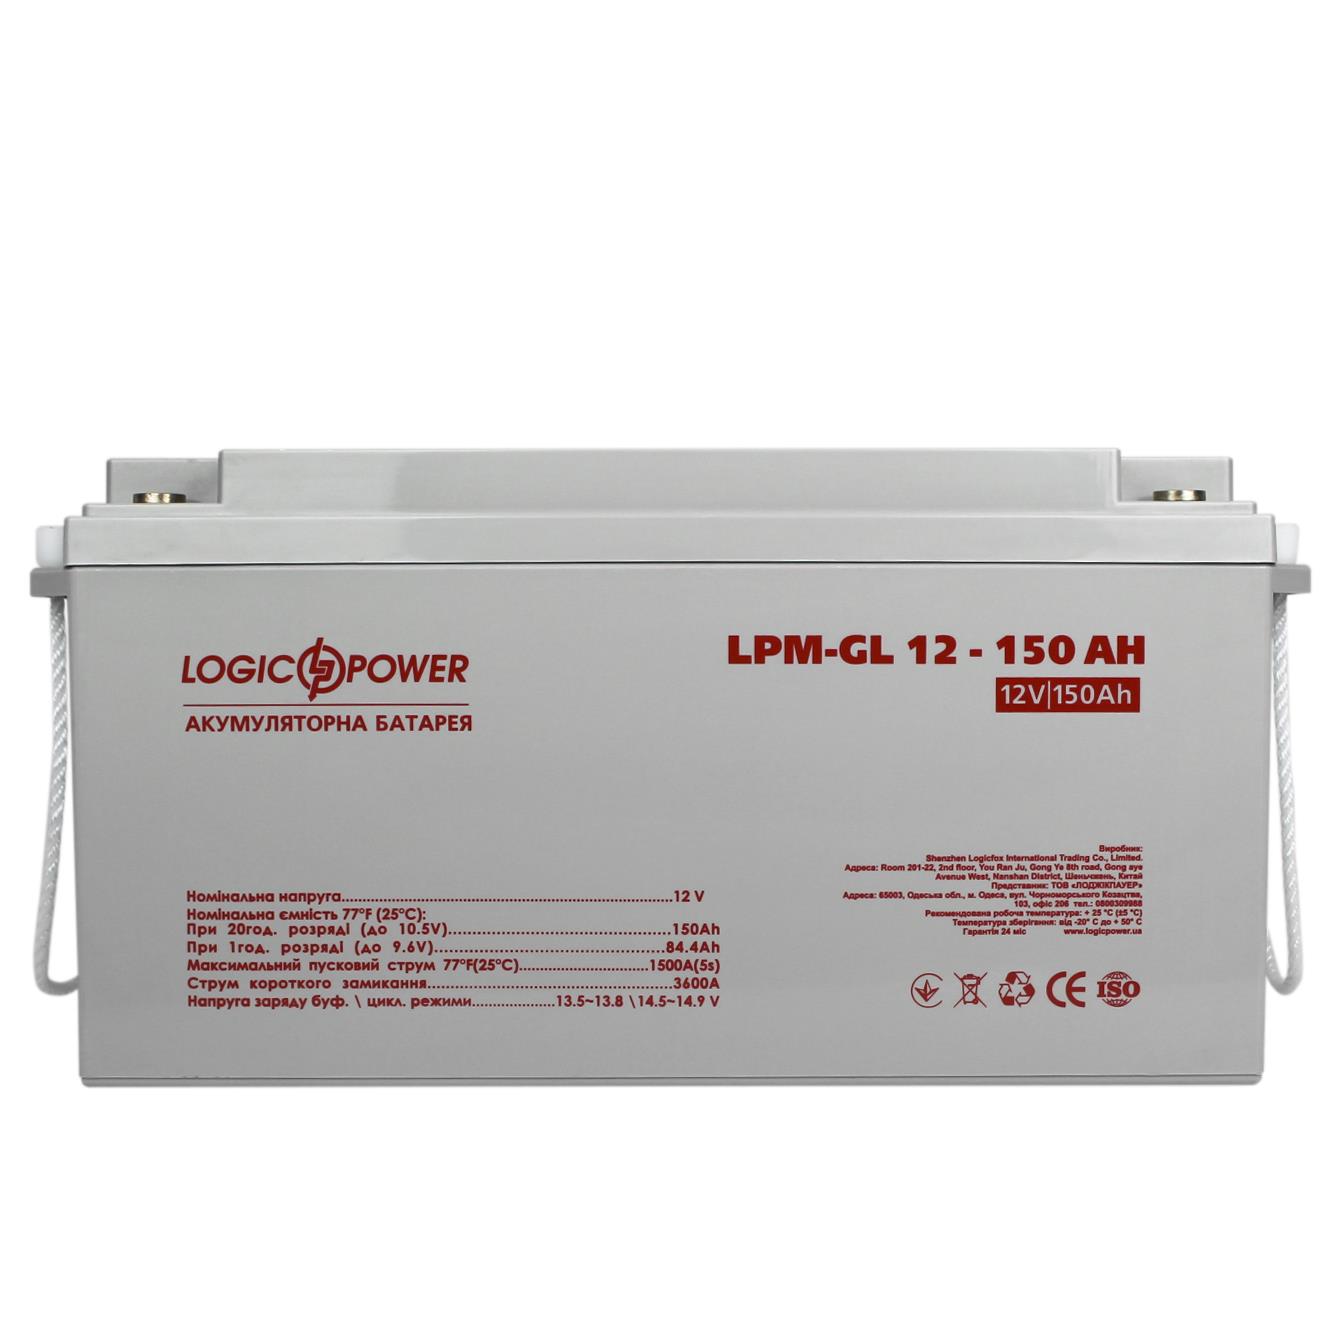 продаём LogicPower LPM-GL 12V - 150 Ah (4155) в Украине - фото 4